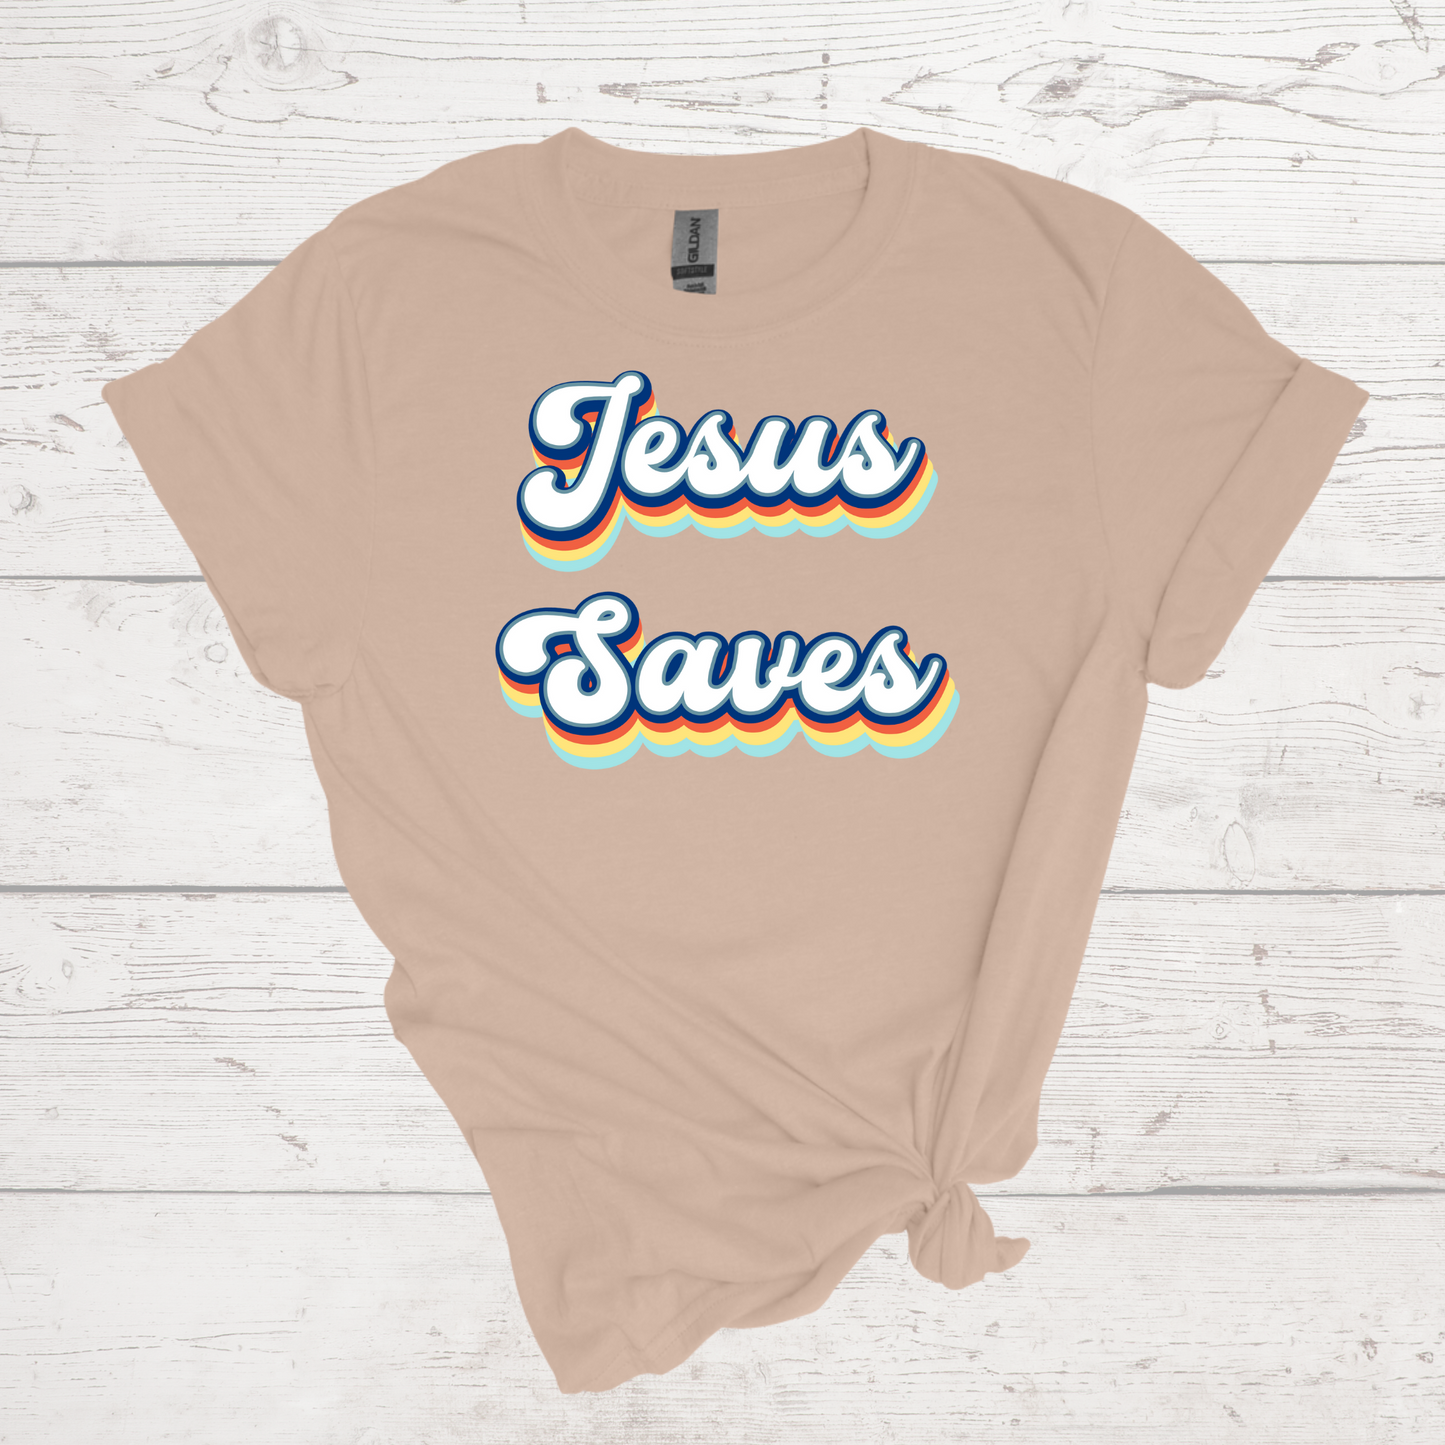 Jesus Saves Shirt